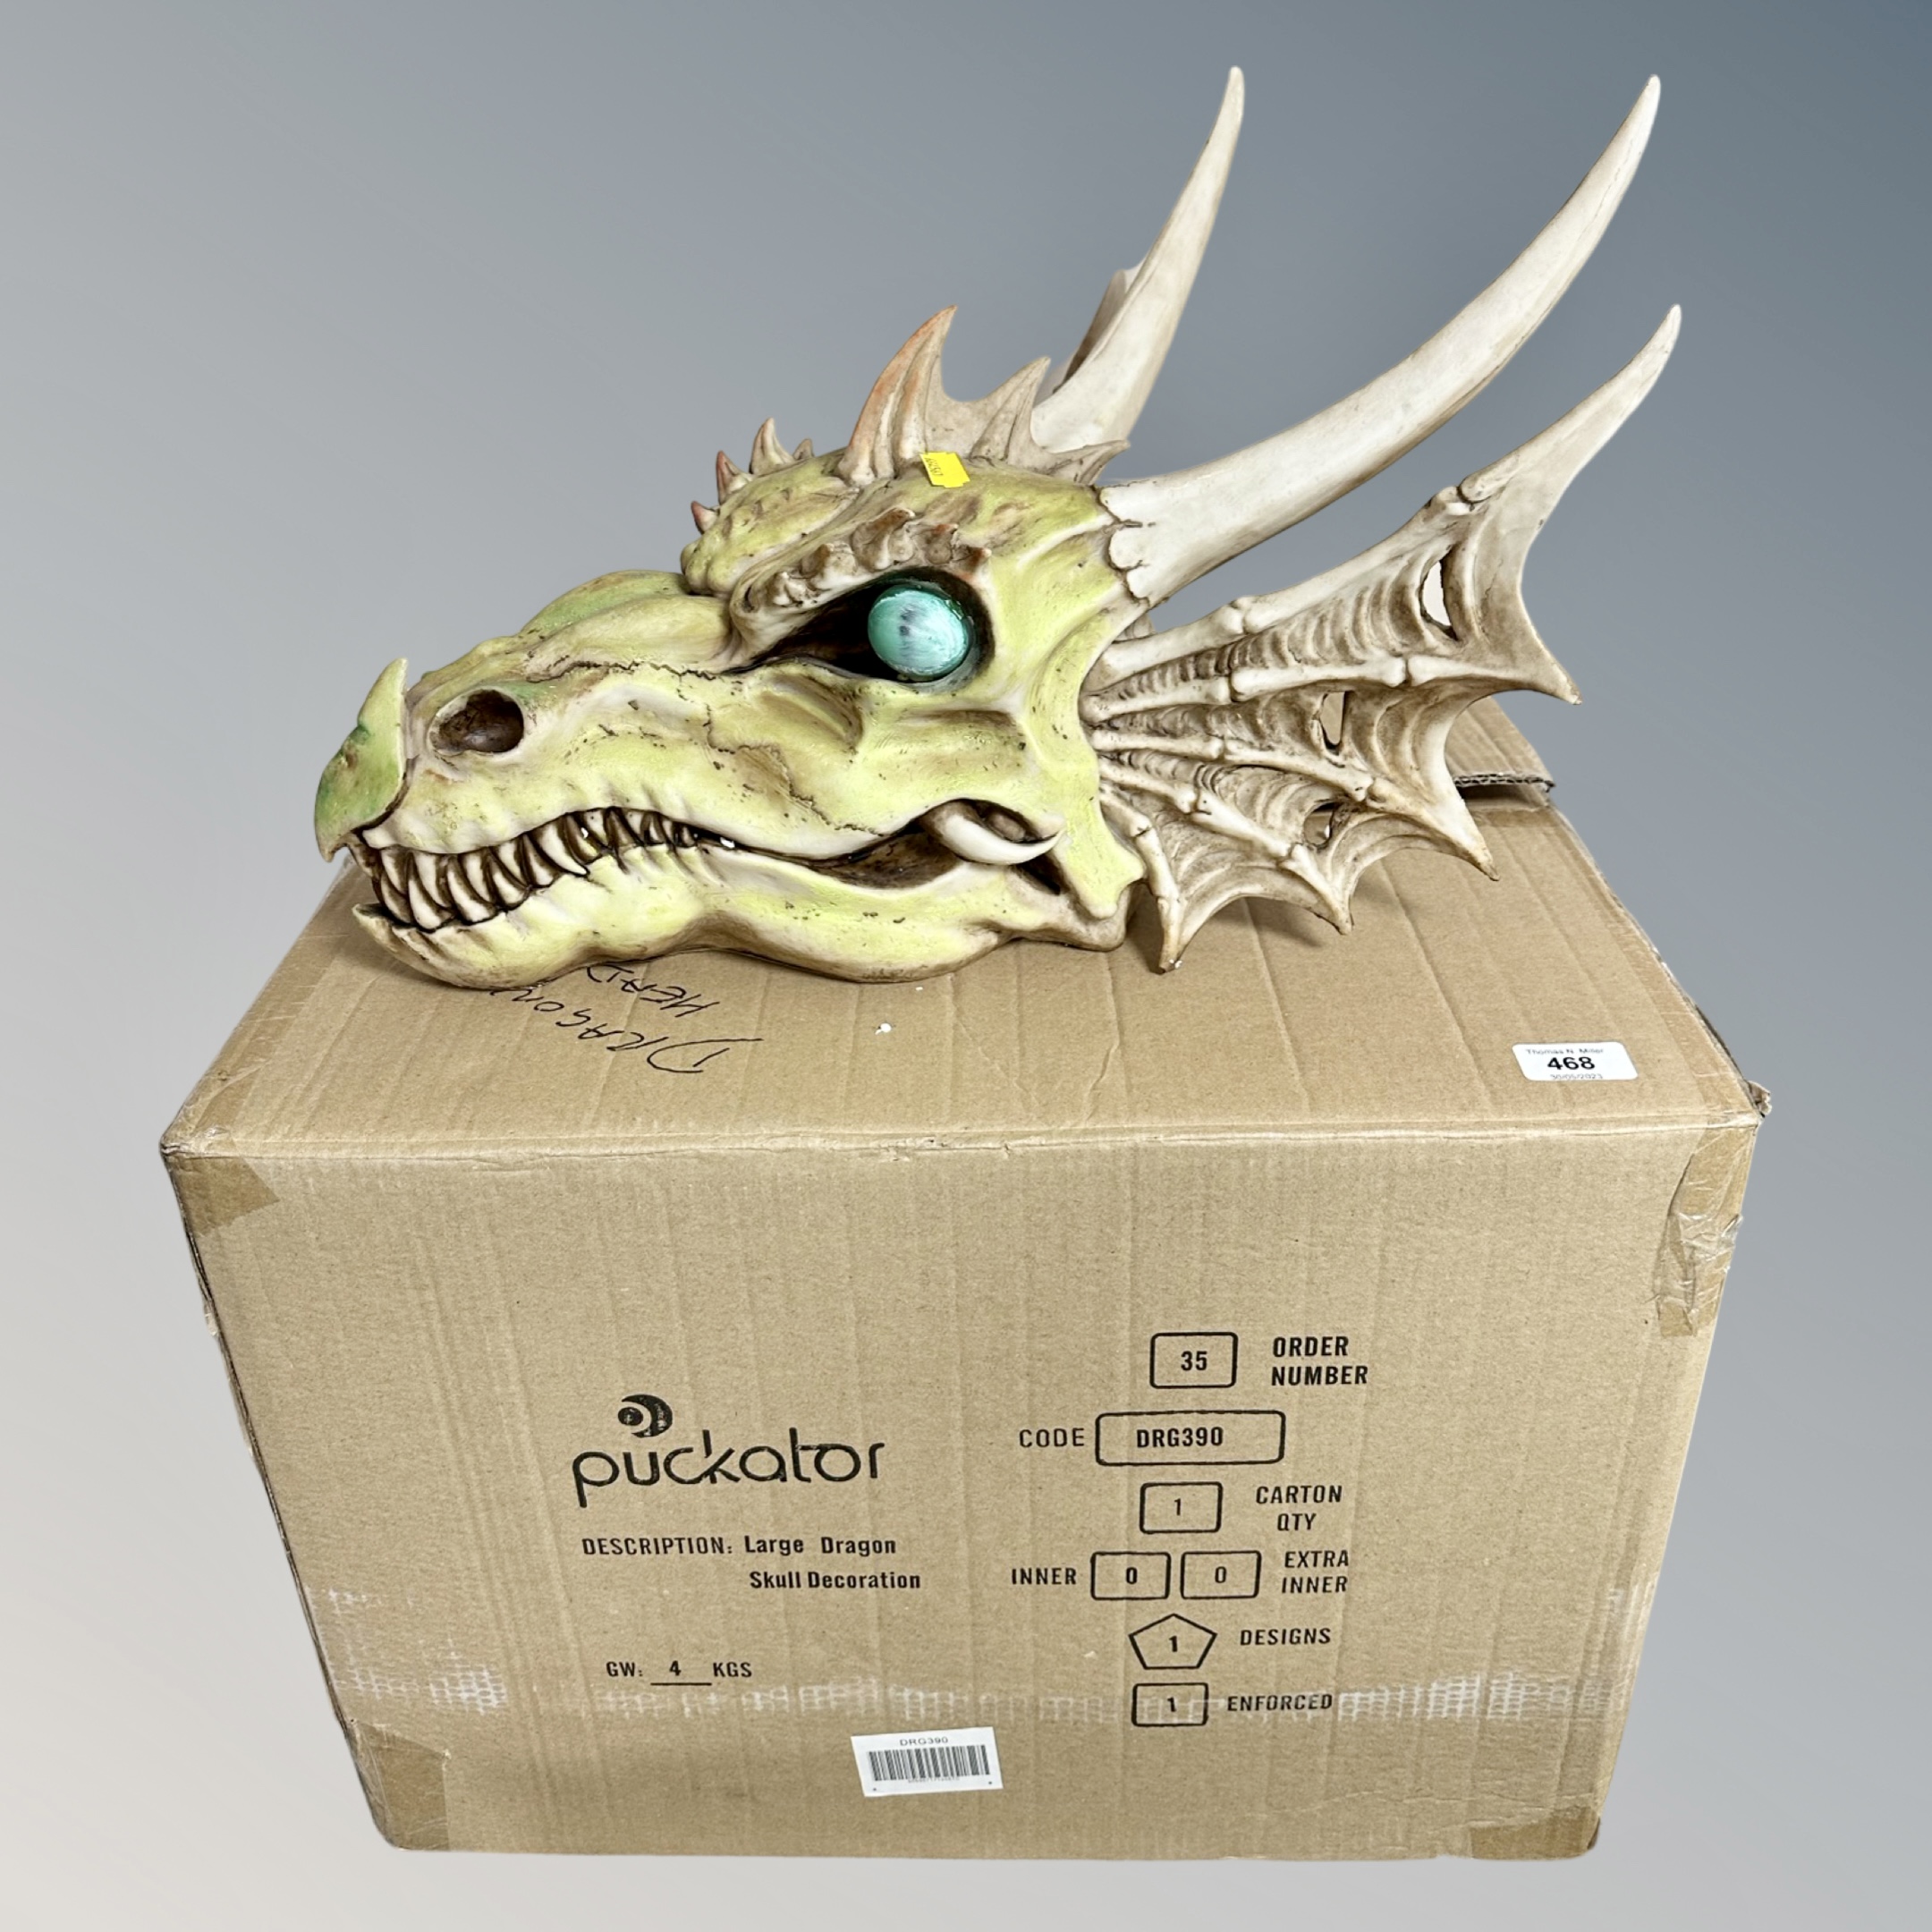 A Puckator Dragon skull decoration with box